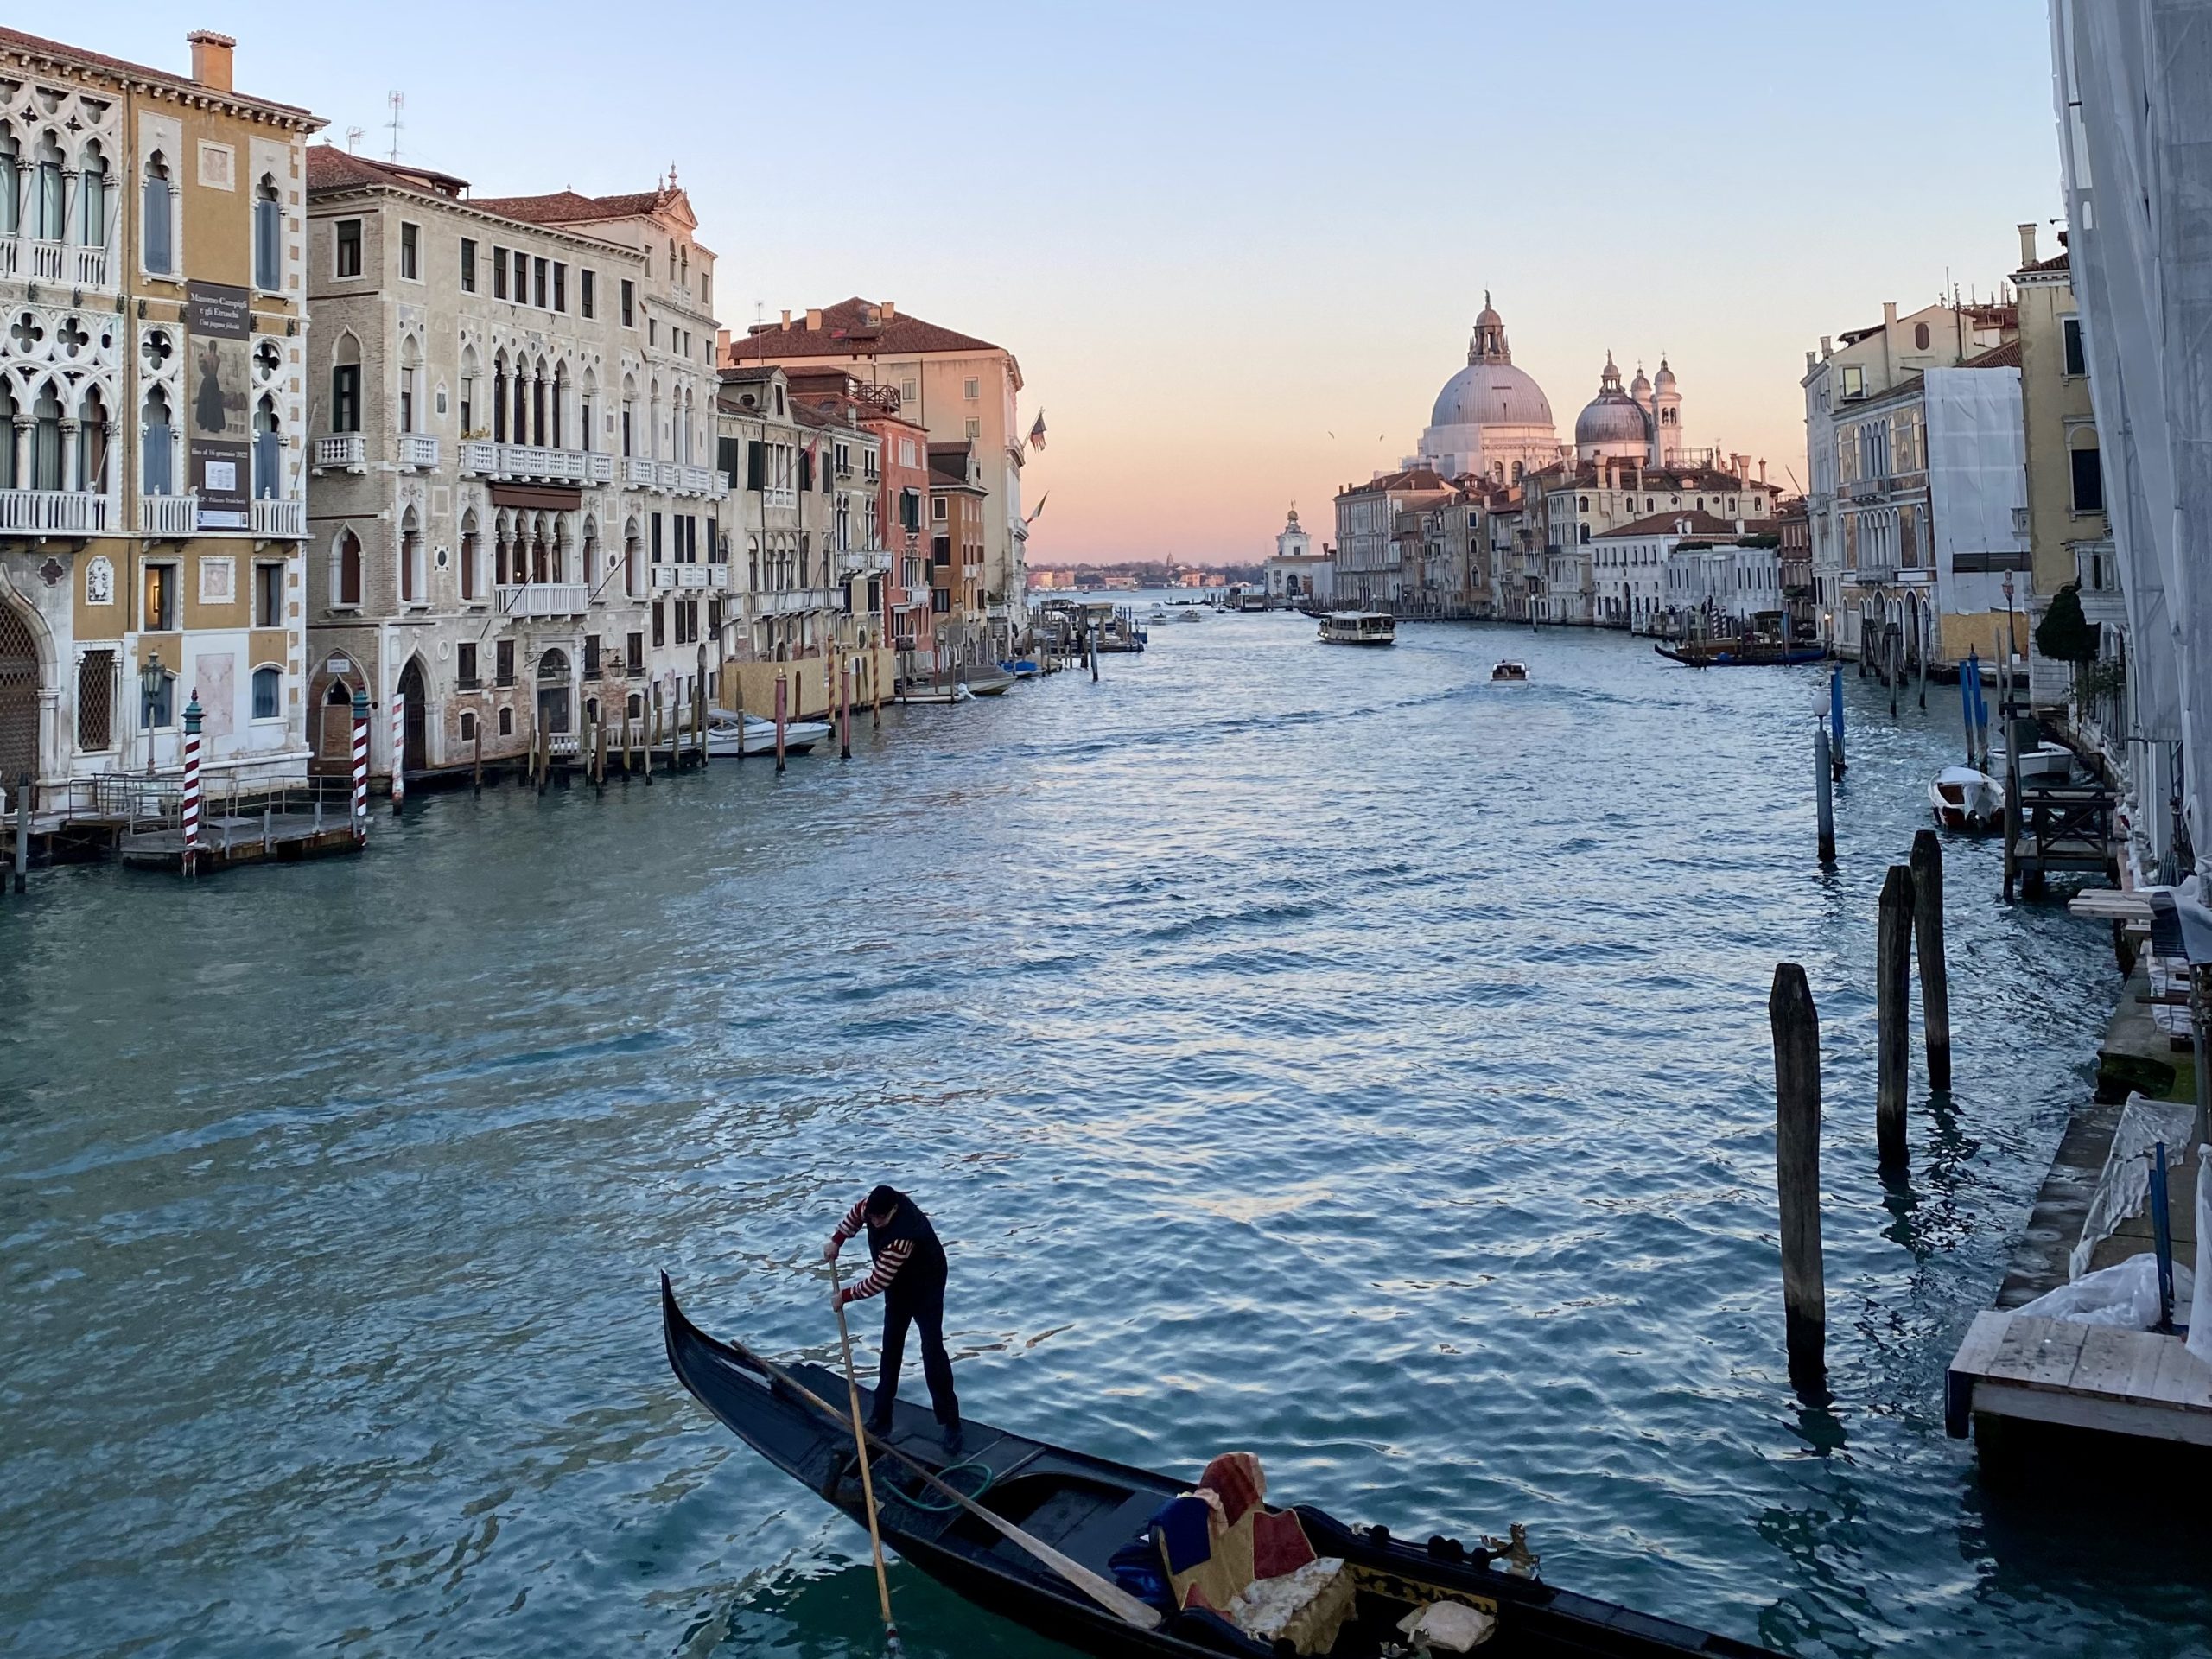 Venice: The Car-less City